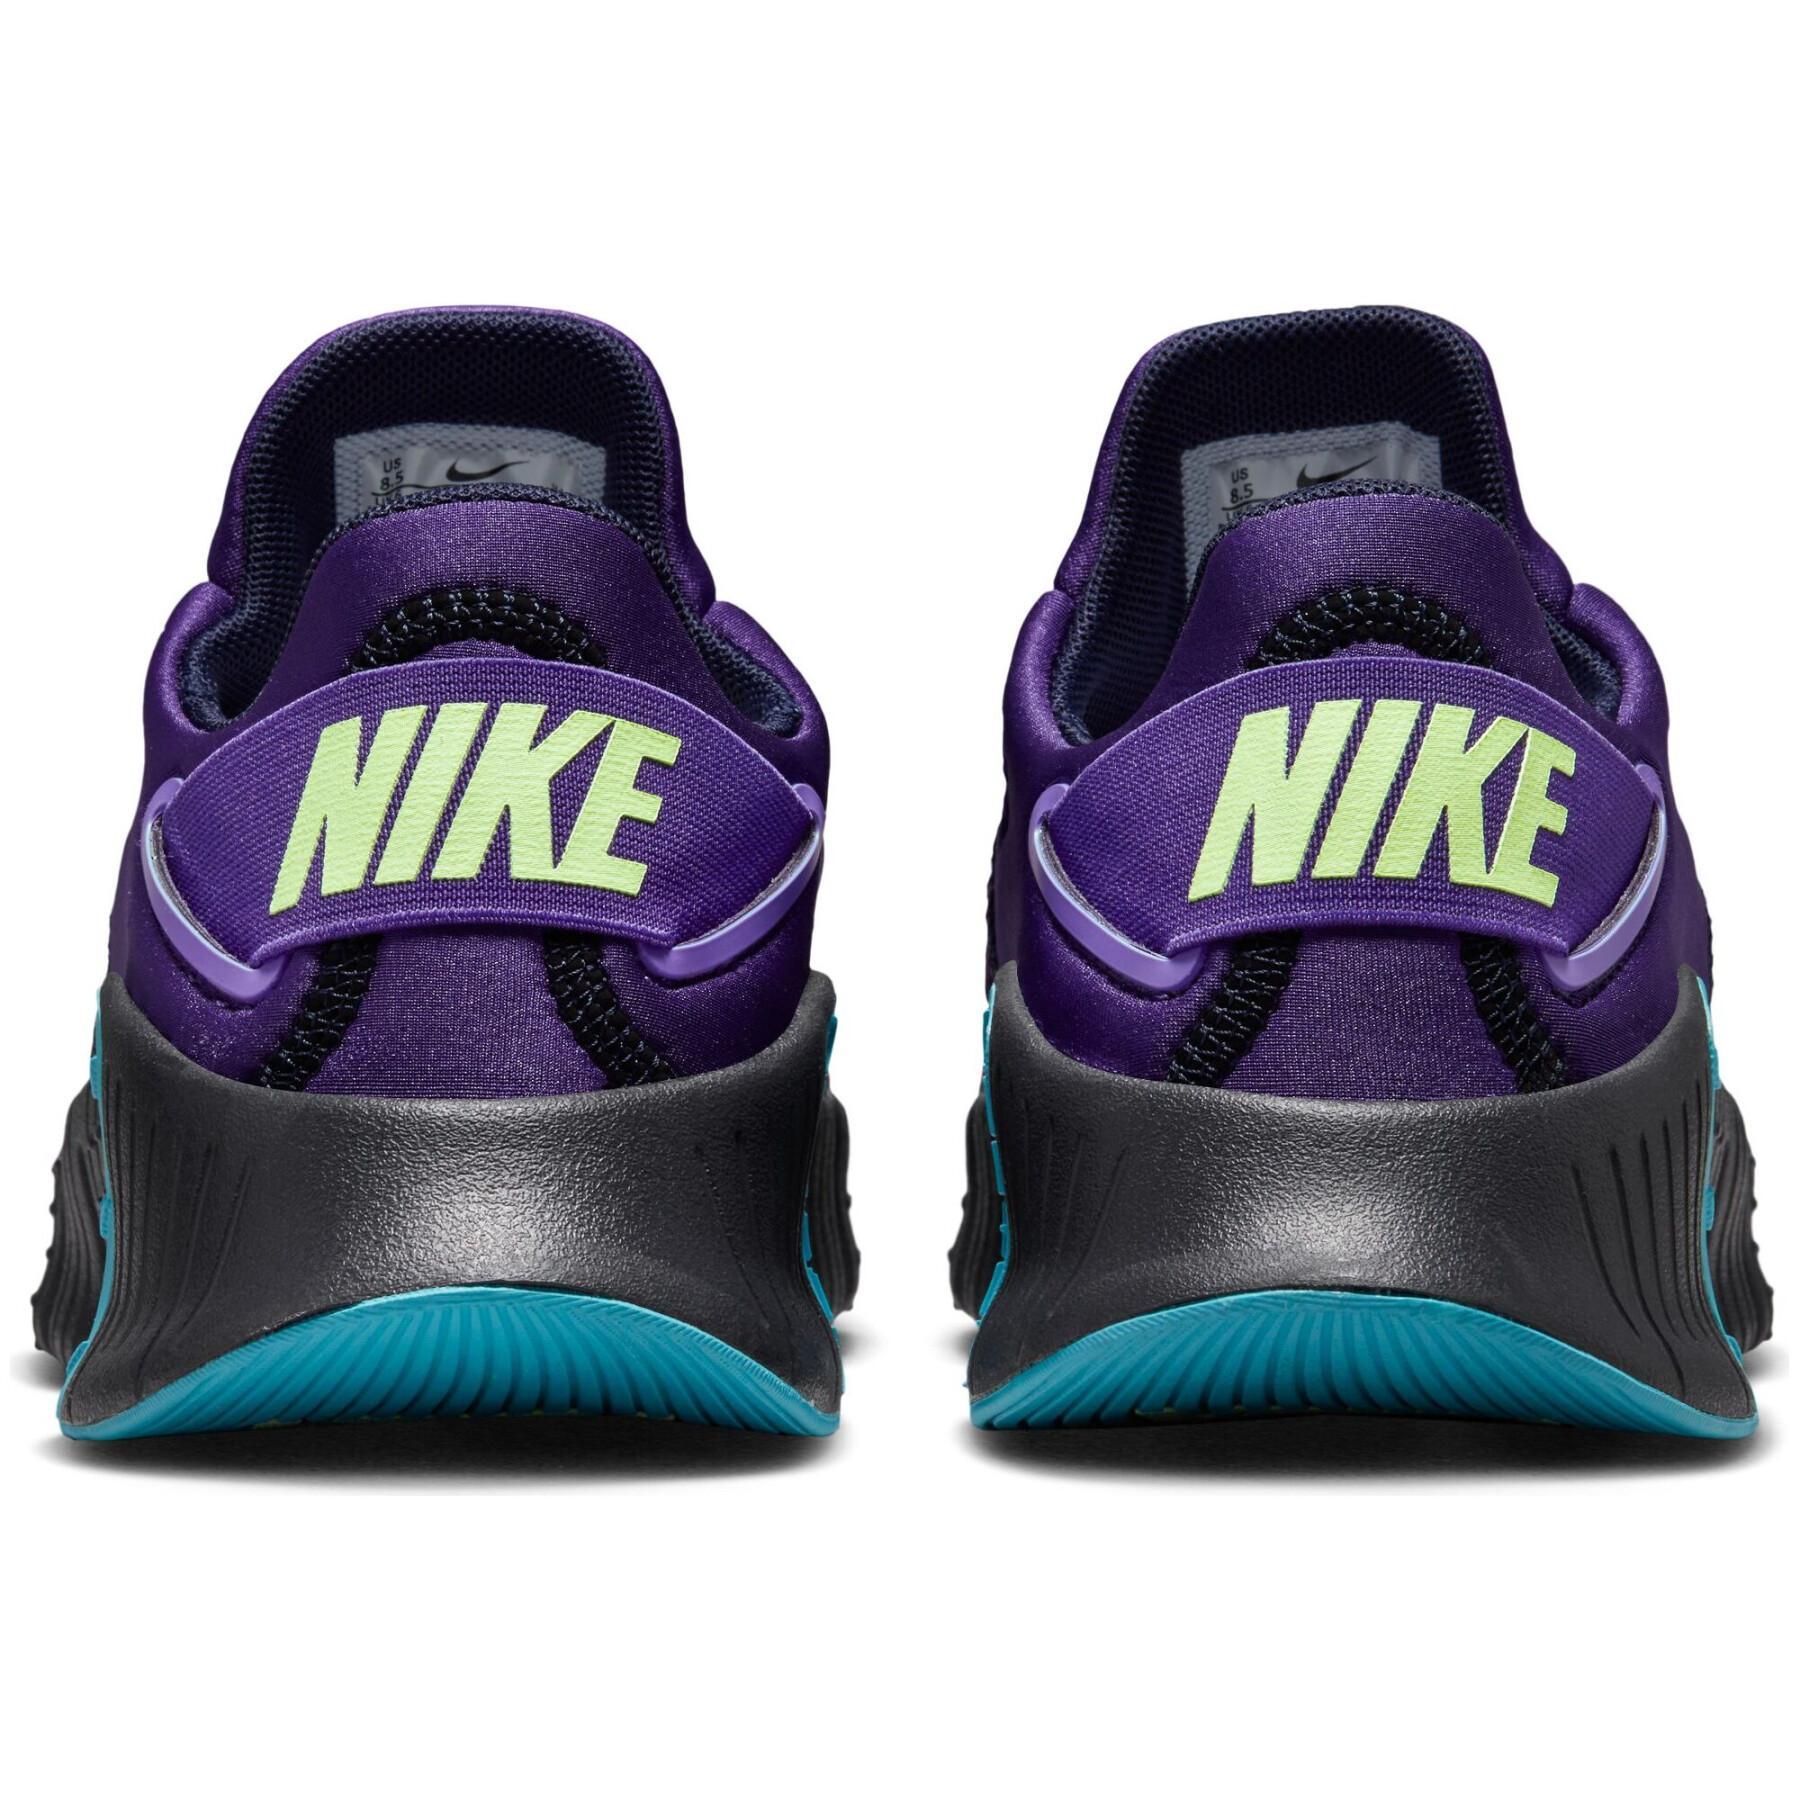 Women's shoes running Nike Free Metcon 4